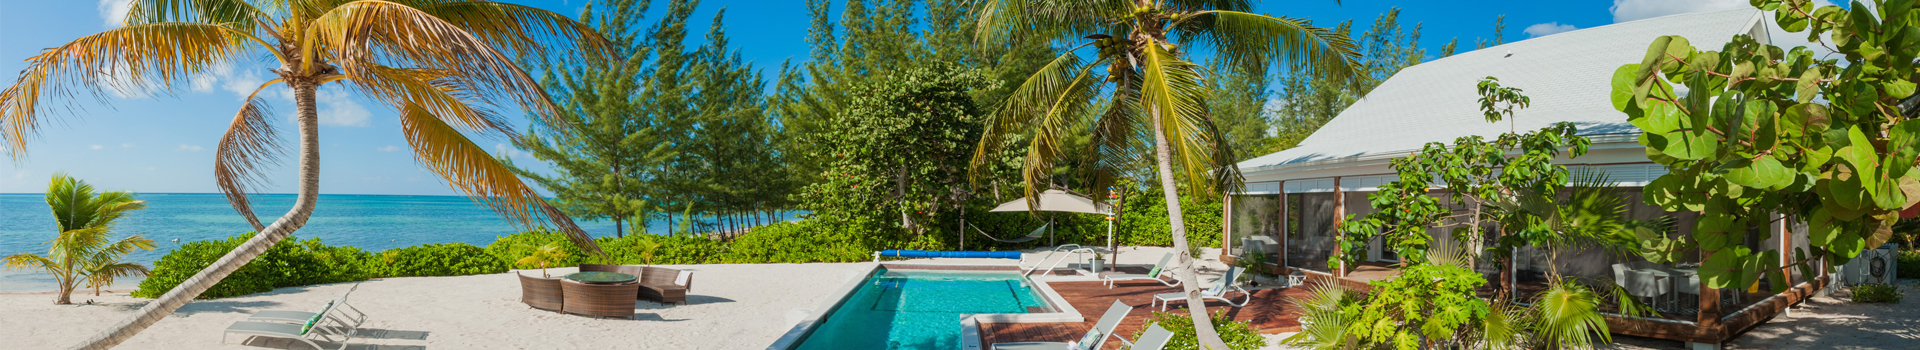 White Cottage Exclusive Vacation Villa Rentals Luxury Cayman